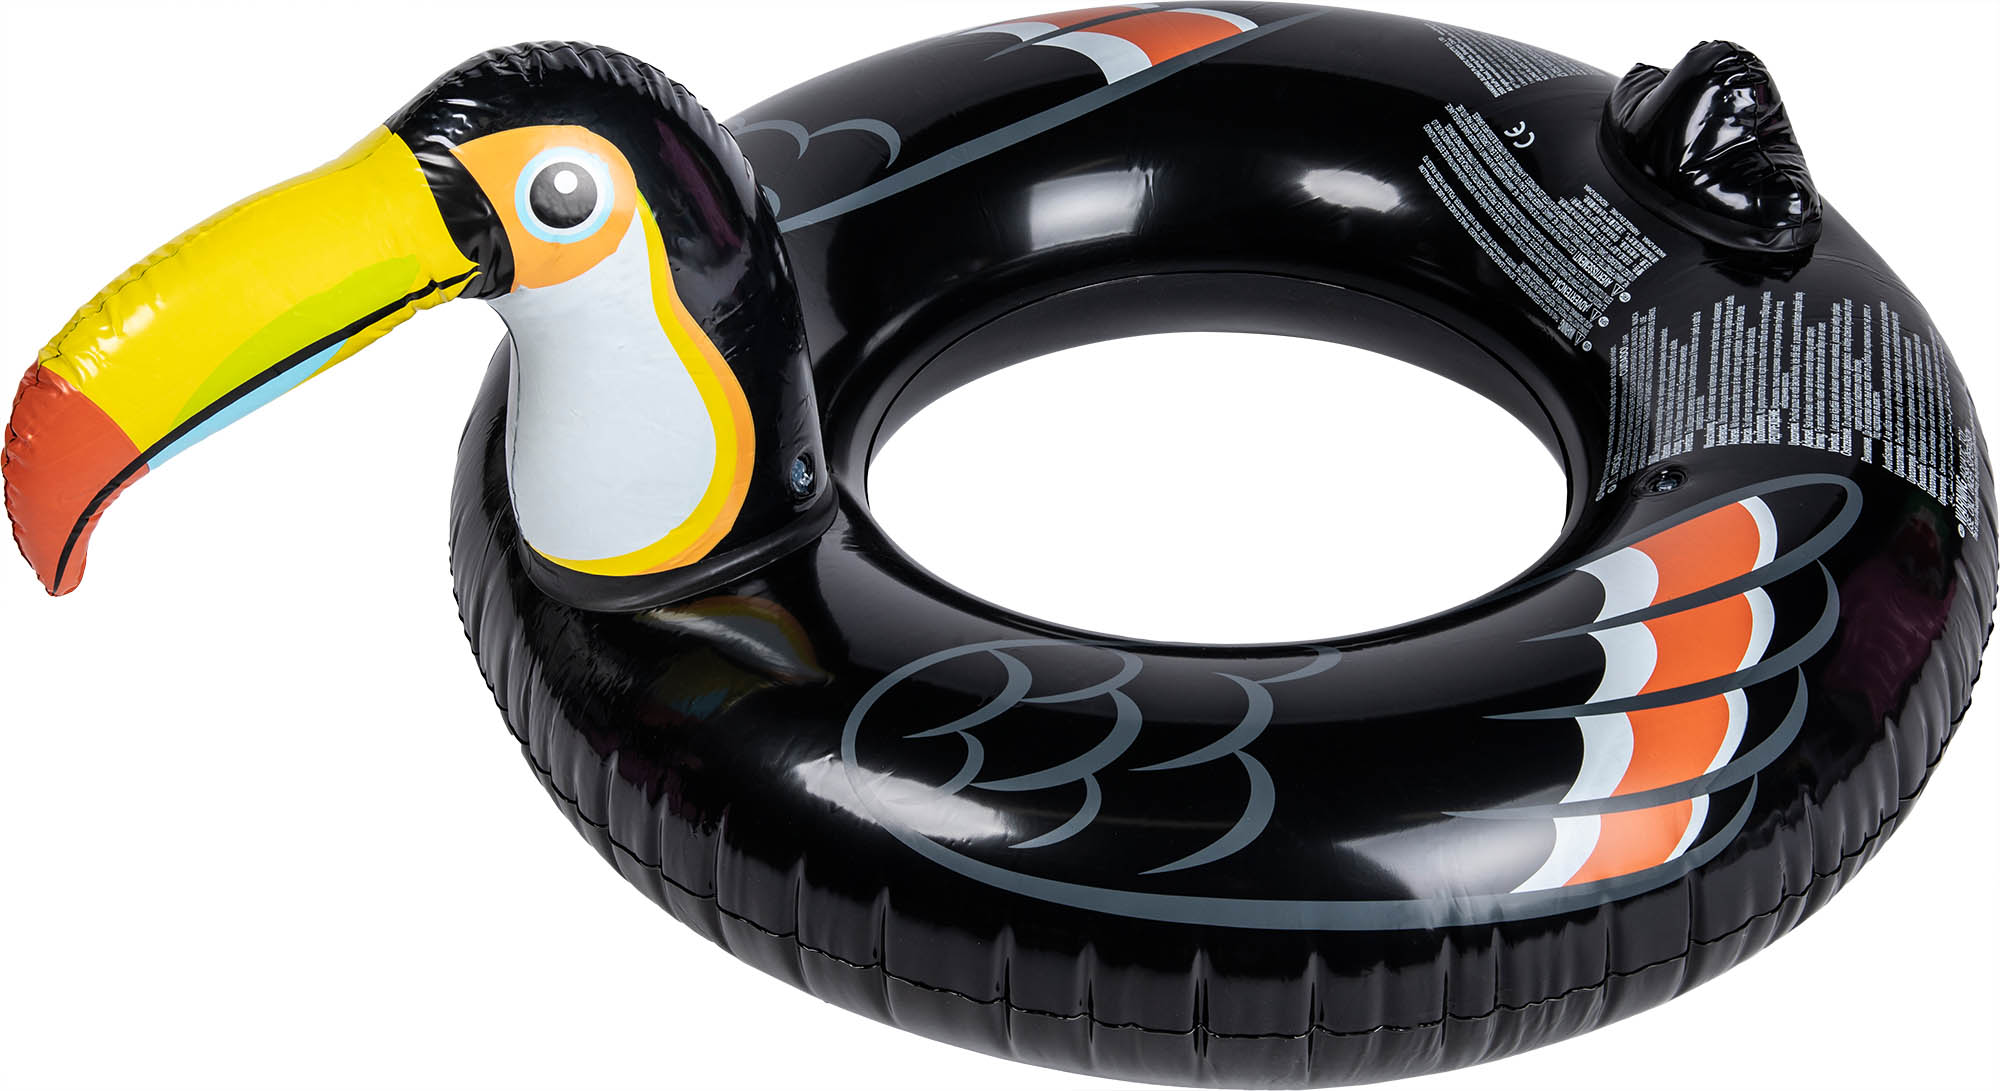 Inflatable swim ring